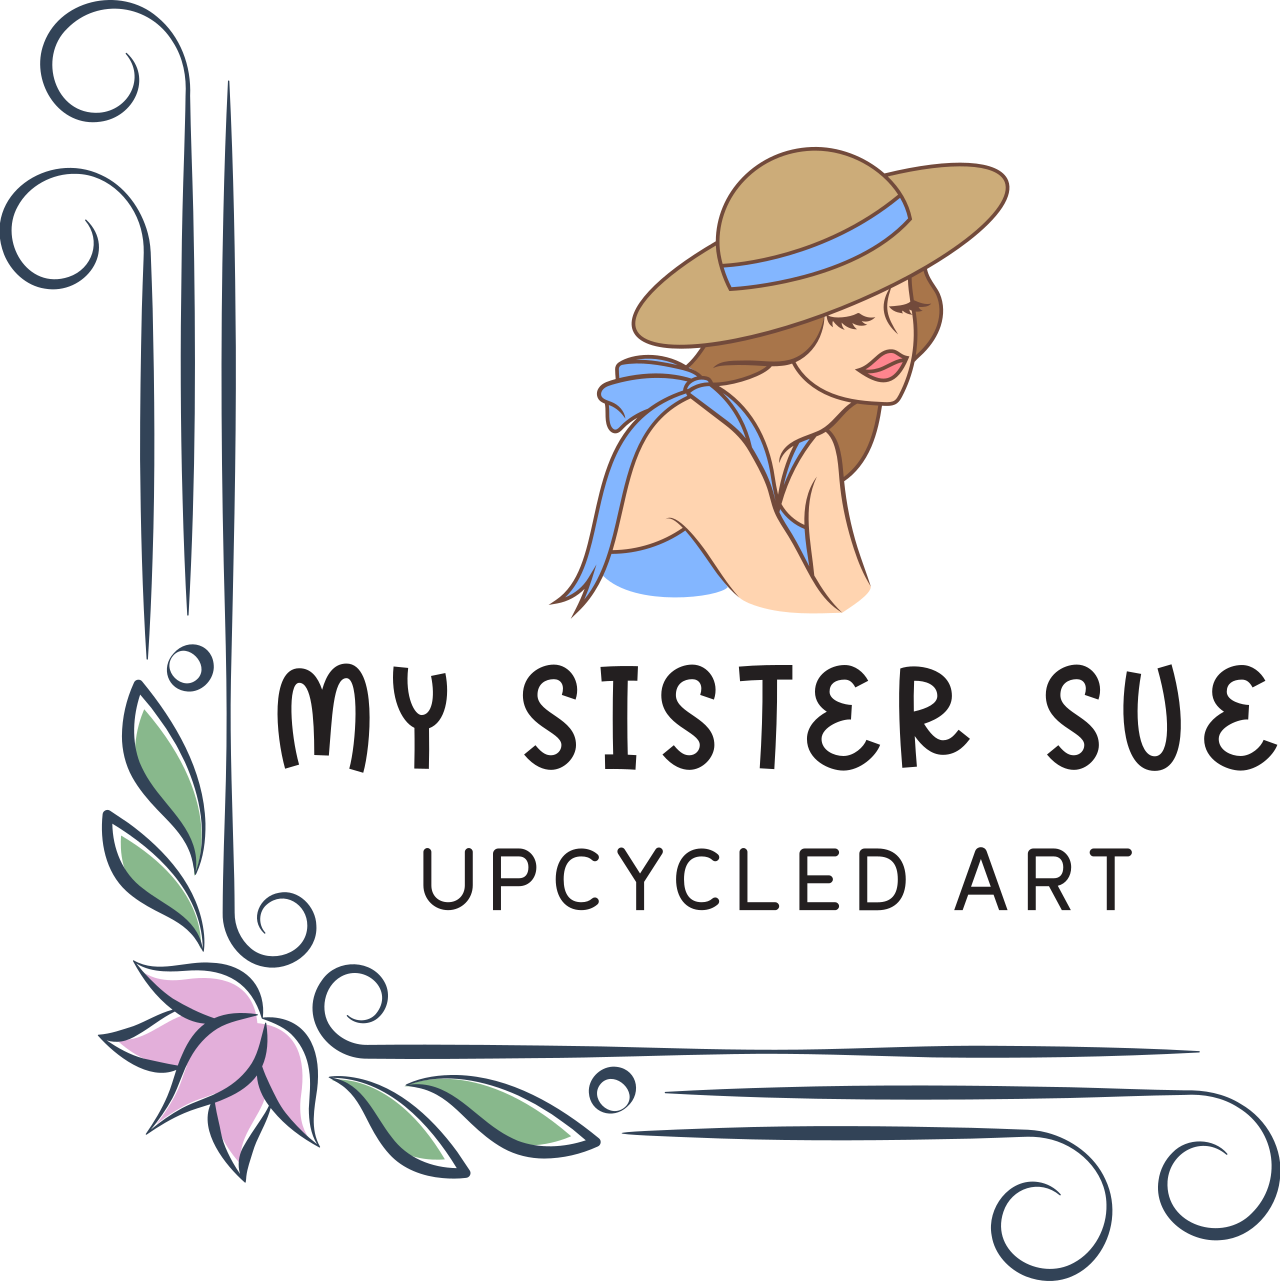 My Sister Sue's logo